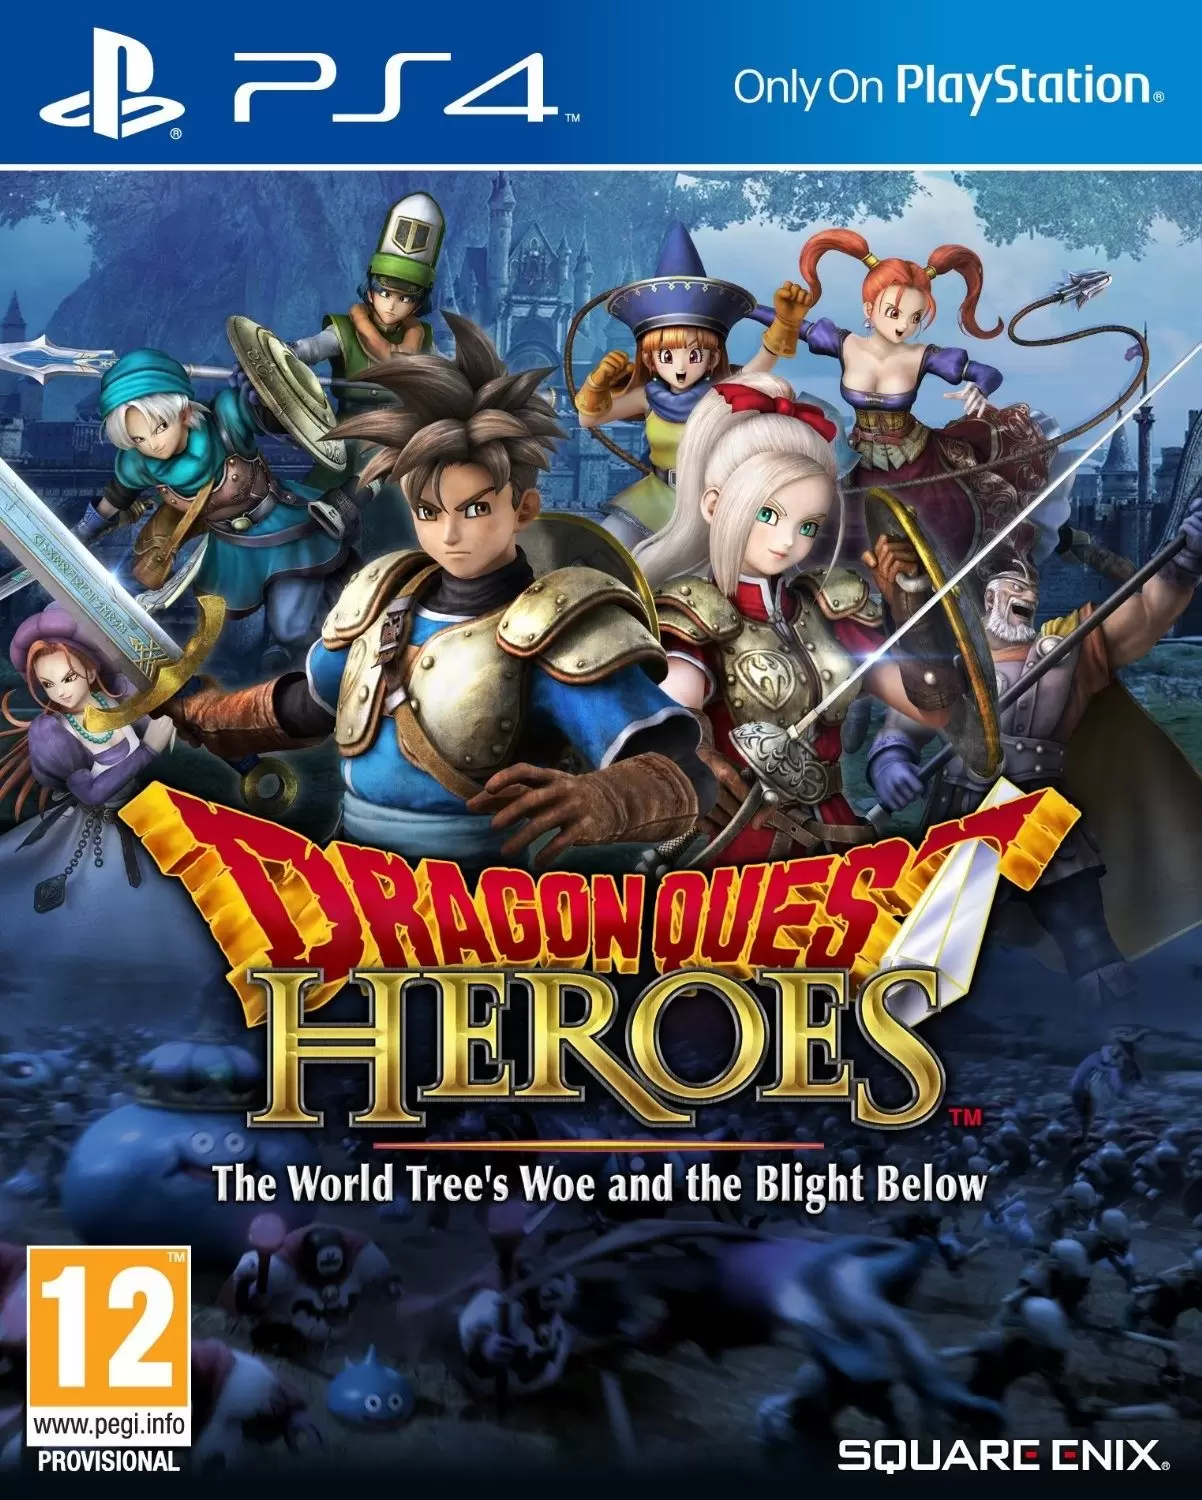 PS4 Games - Dragon Quest Heroes